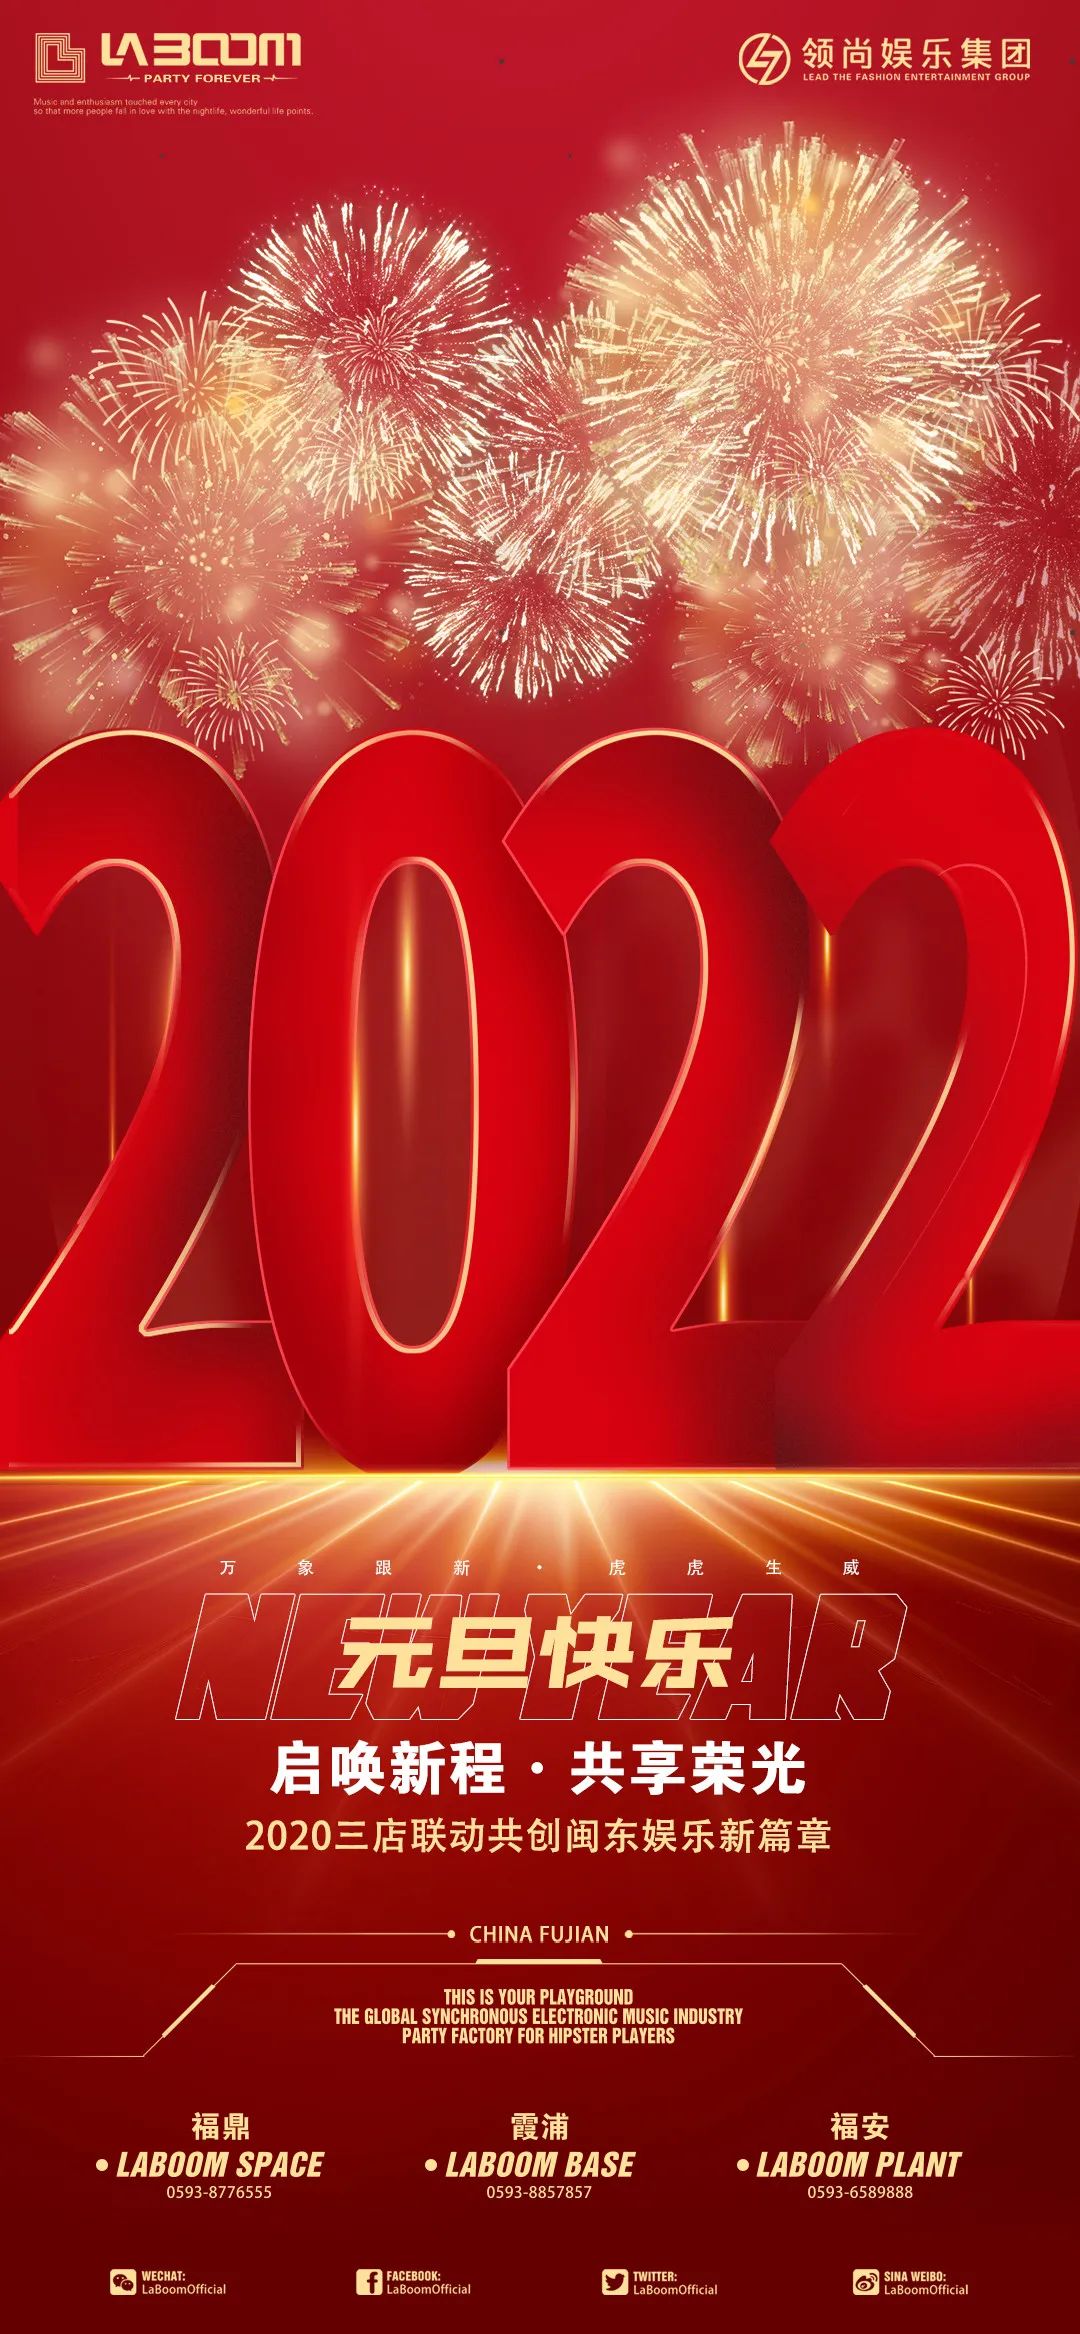 2022 happy new year 元旦快乐·万象更新·共赴新程